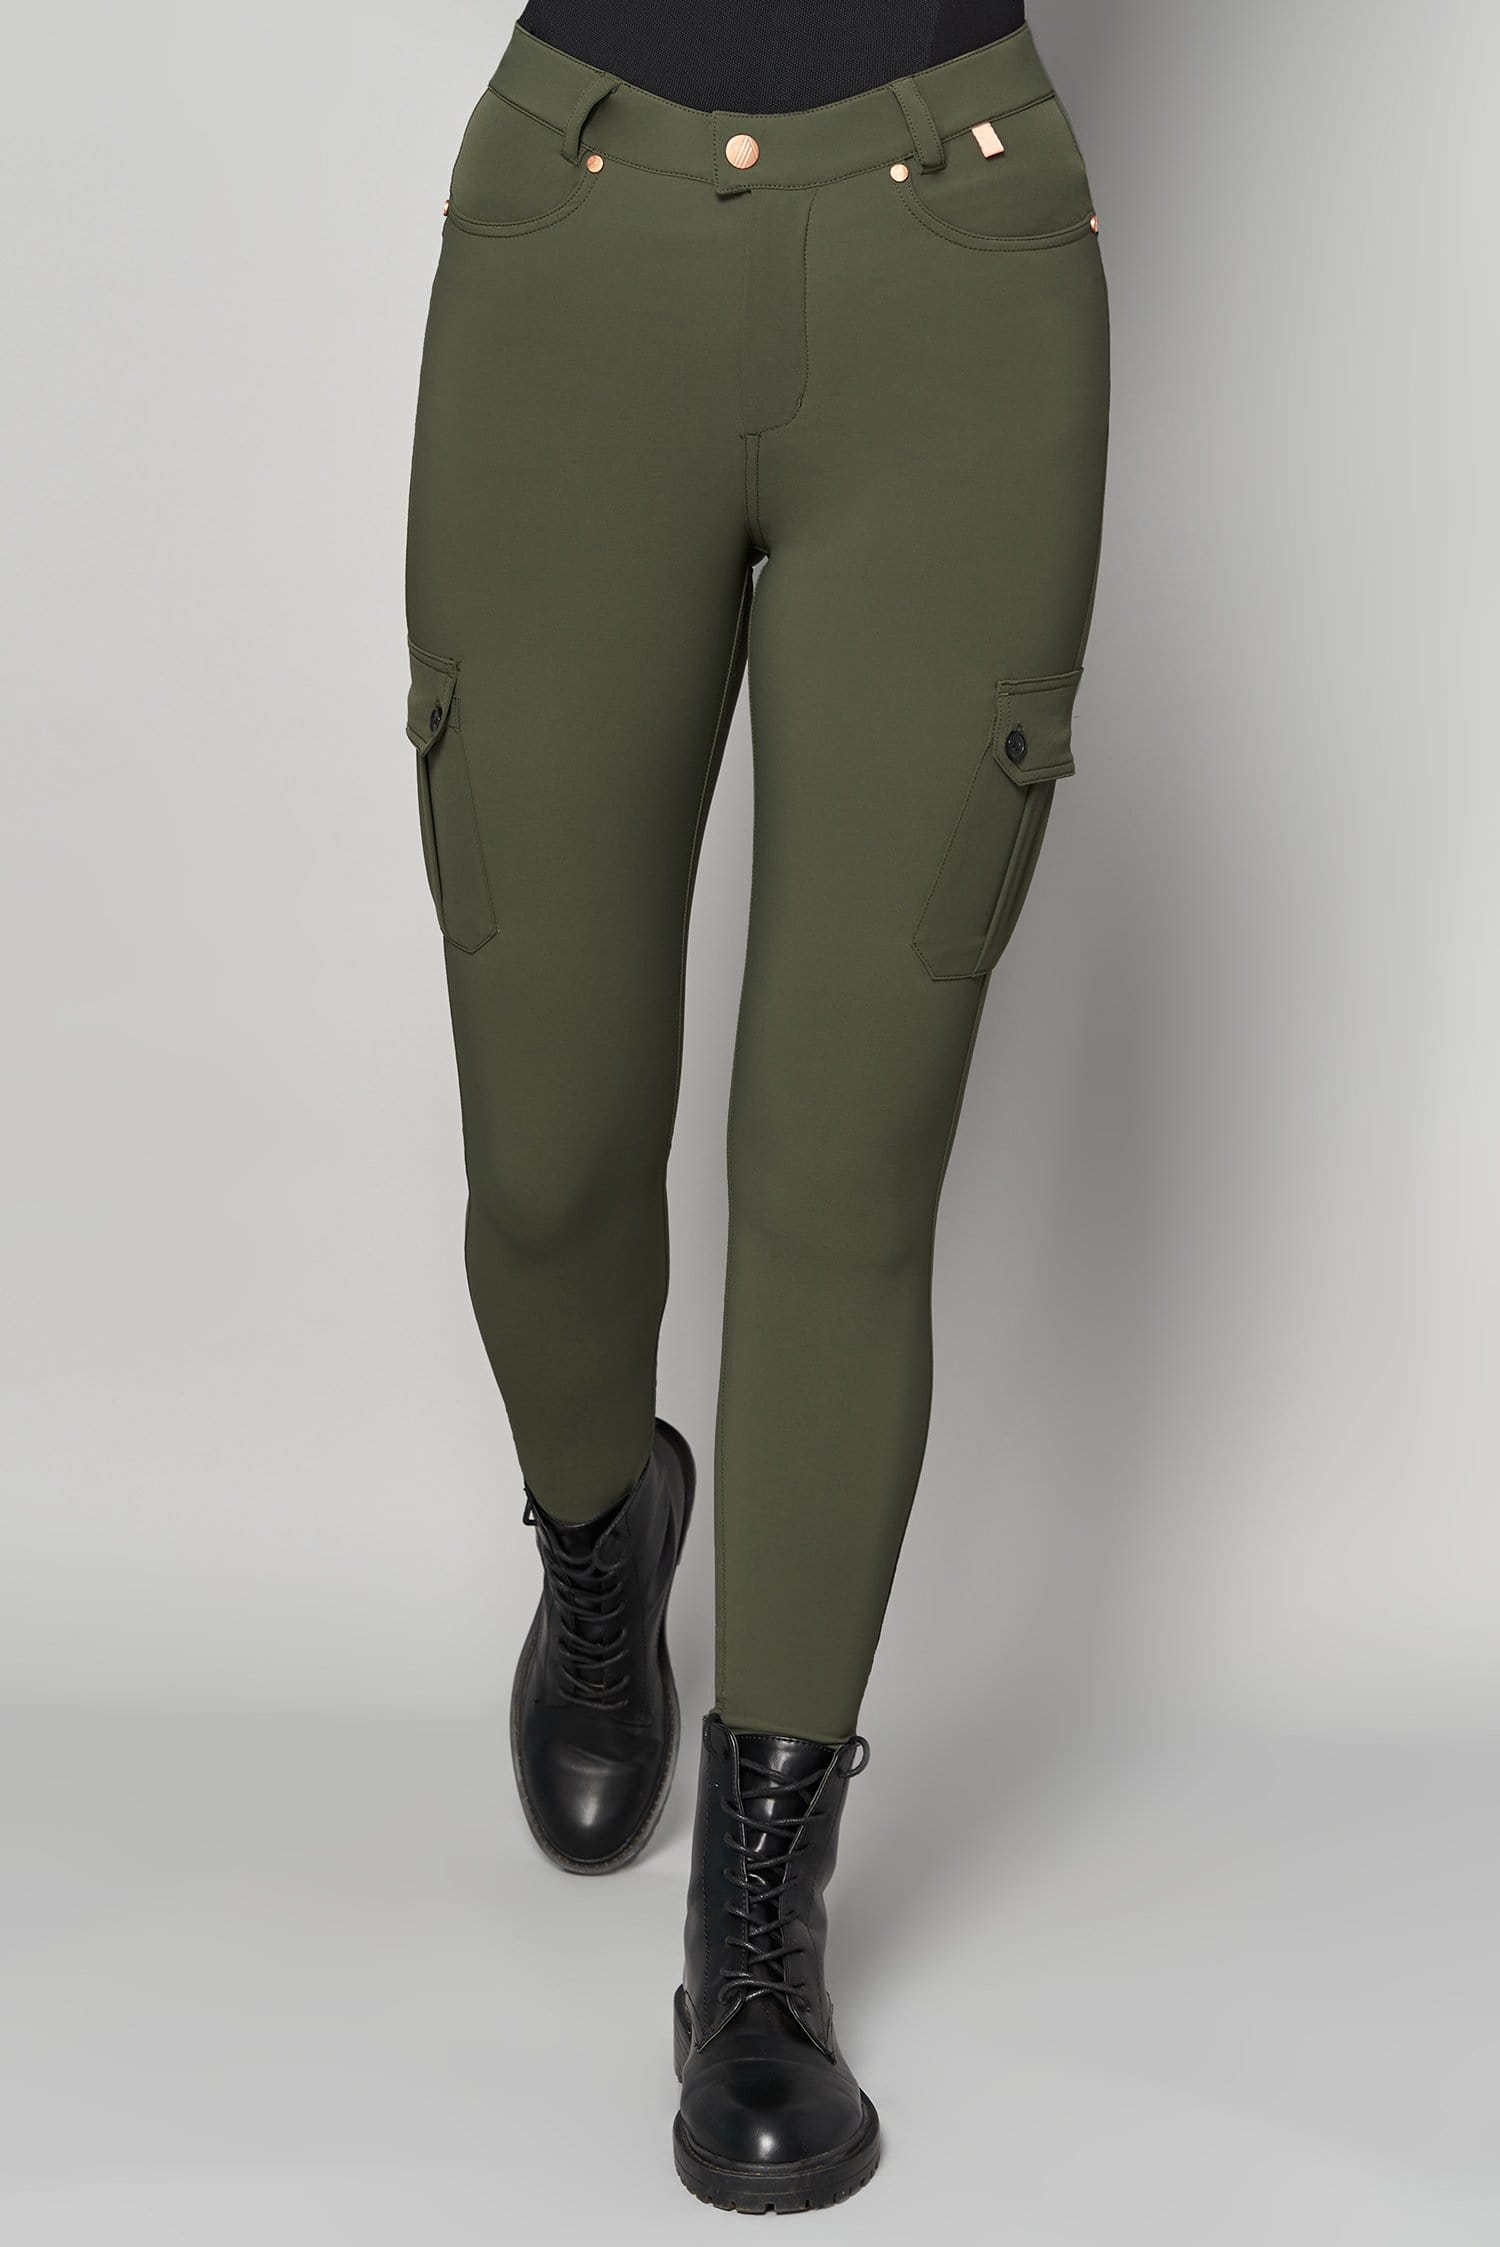 Cargo Max Stretch Outdoor Trousers - Khaki - 32p / Uk14 - Womens - Acai Outdoorwear